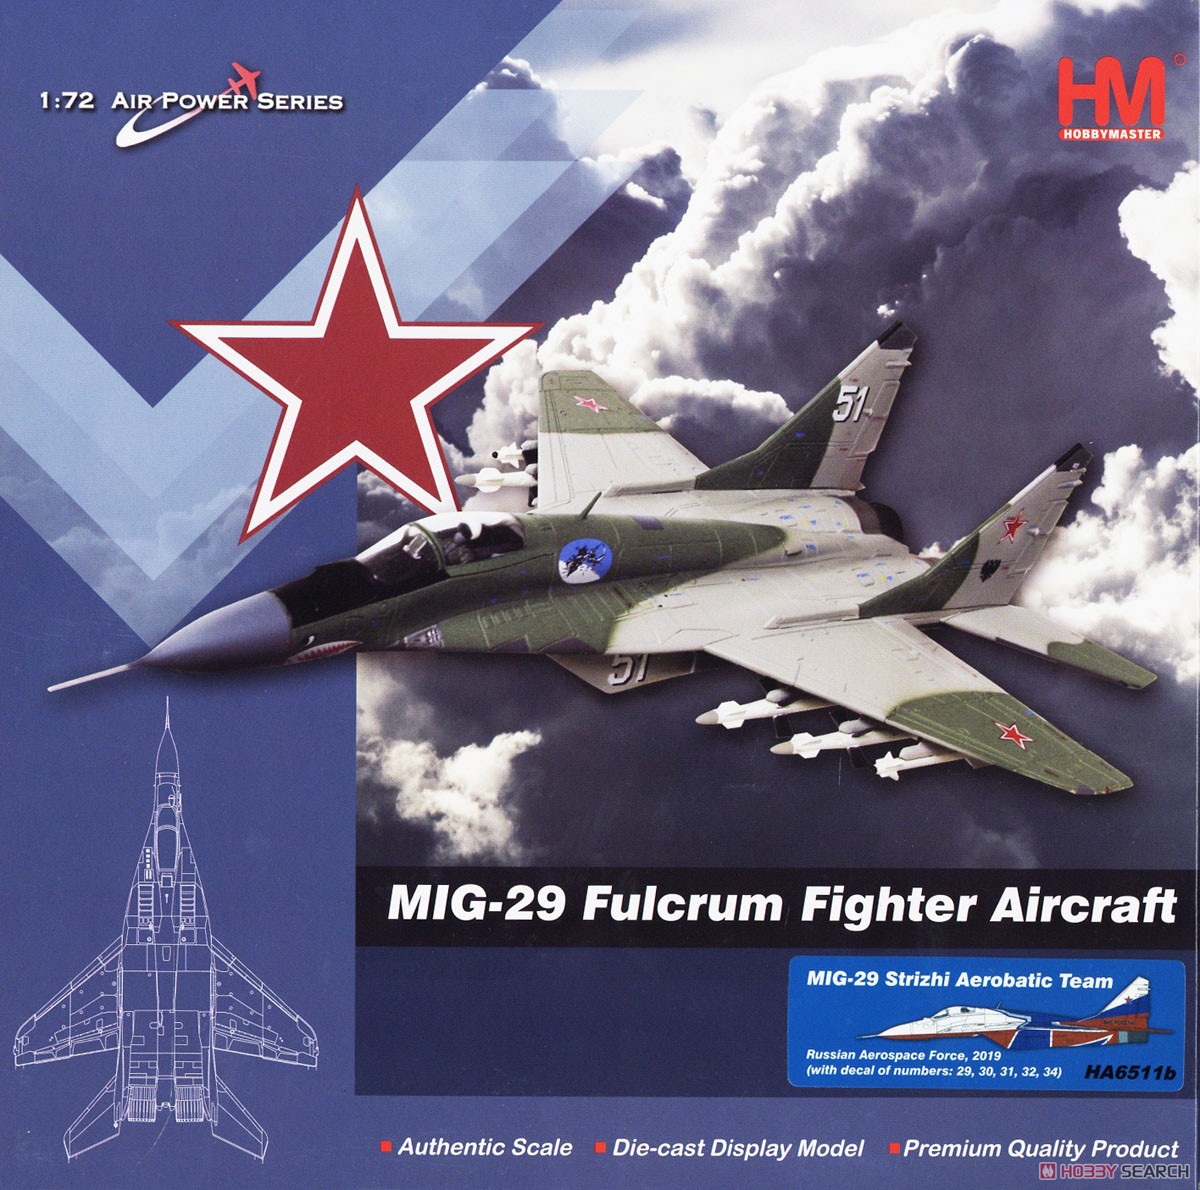 MiG-29 ファルクラム `アクロバットチーム ストリッフィ 29～34デカール付属版` (完成品飛行機) パッケージ1